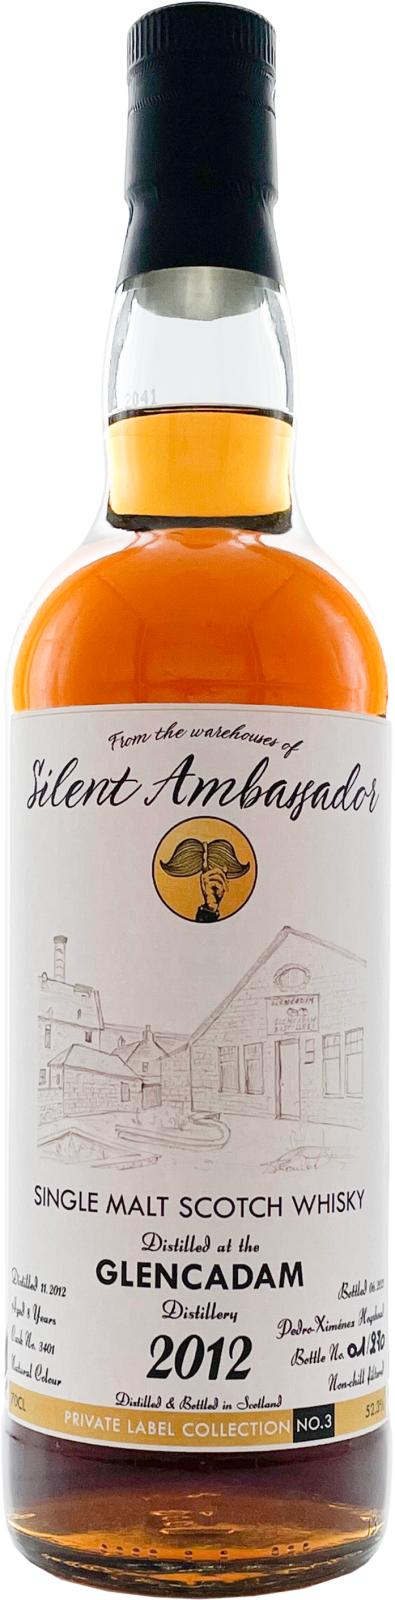 Glencadam 2012 SltA Private Label Collection 8 Year Old 2021 Release (Cask #3401) Single Malt Scotch Whisky | 700ML